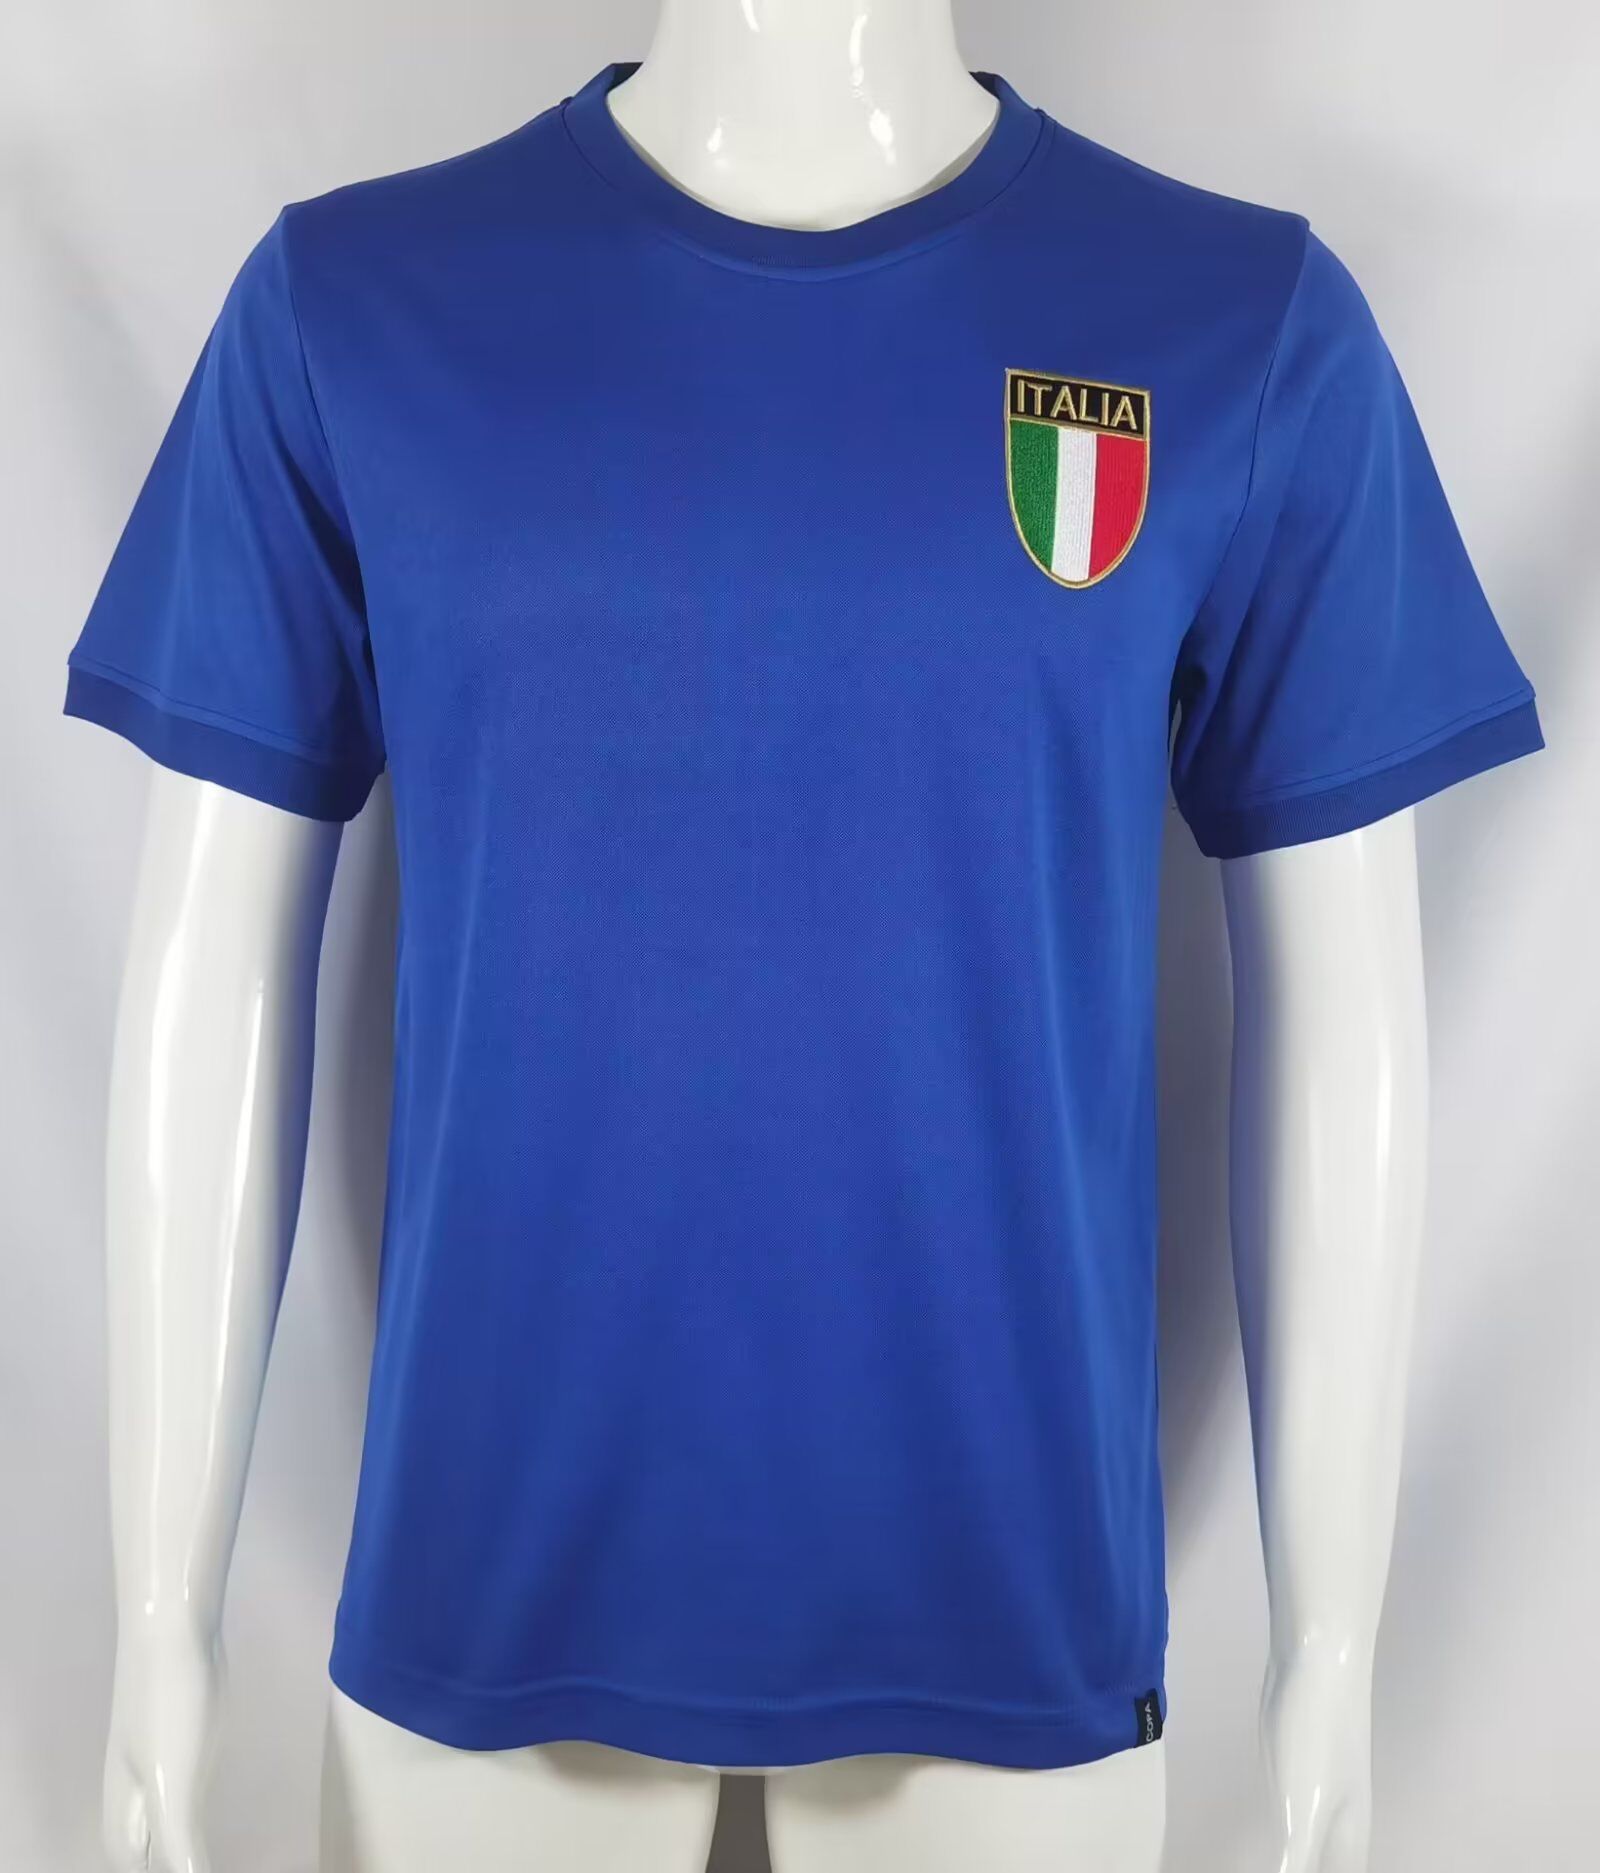 Louis Vuitton's first ever football shirt 👀 #footballshirts #footyshi